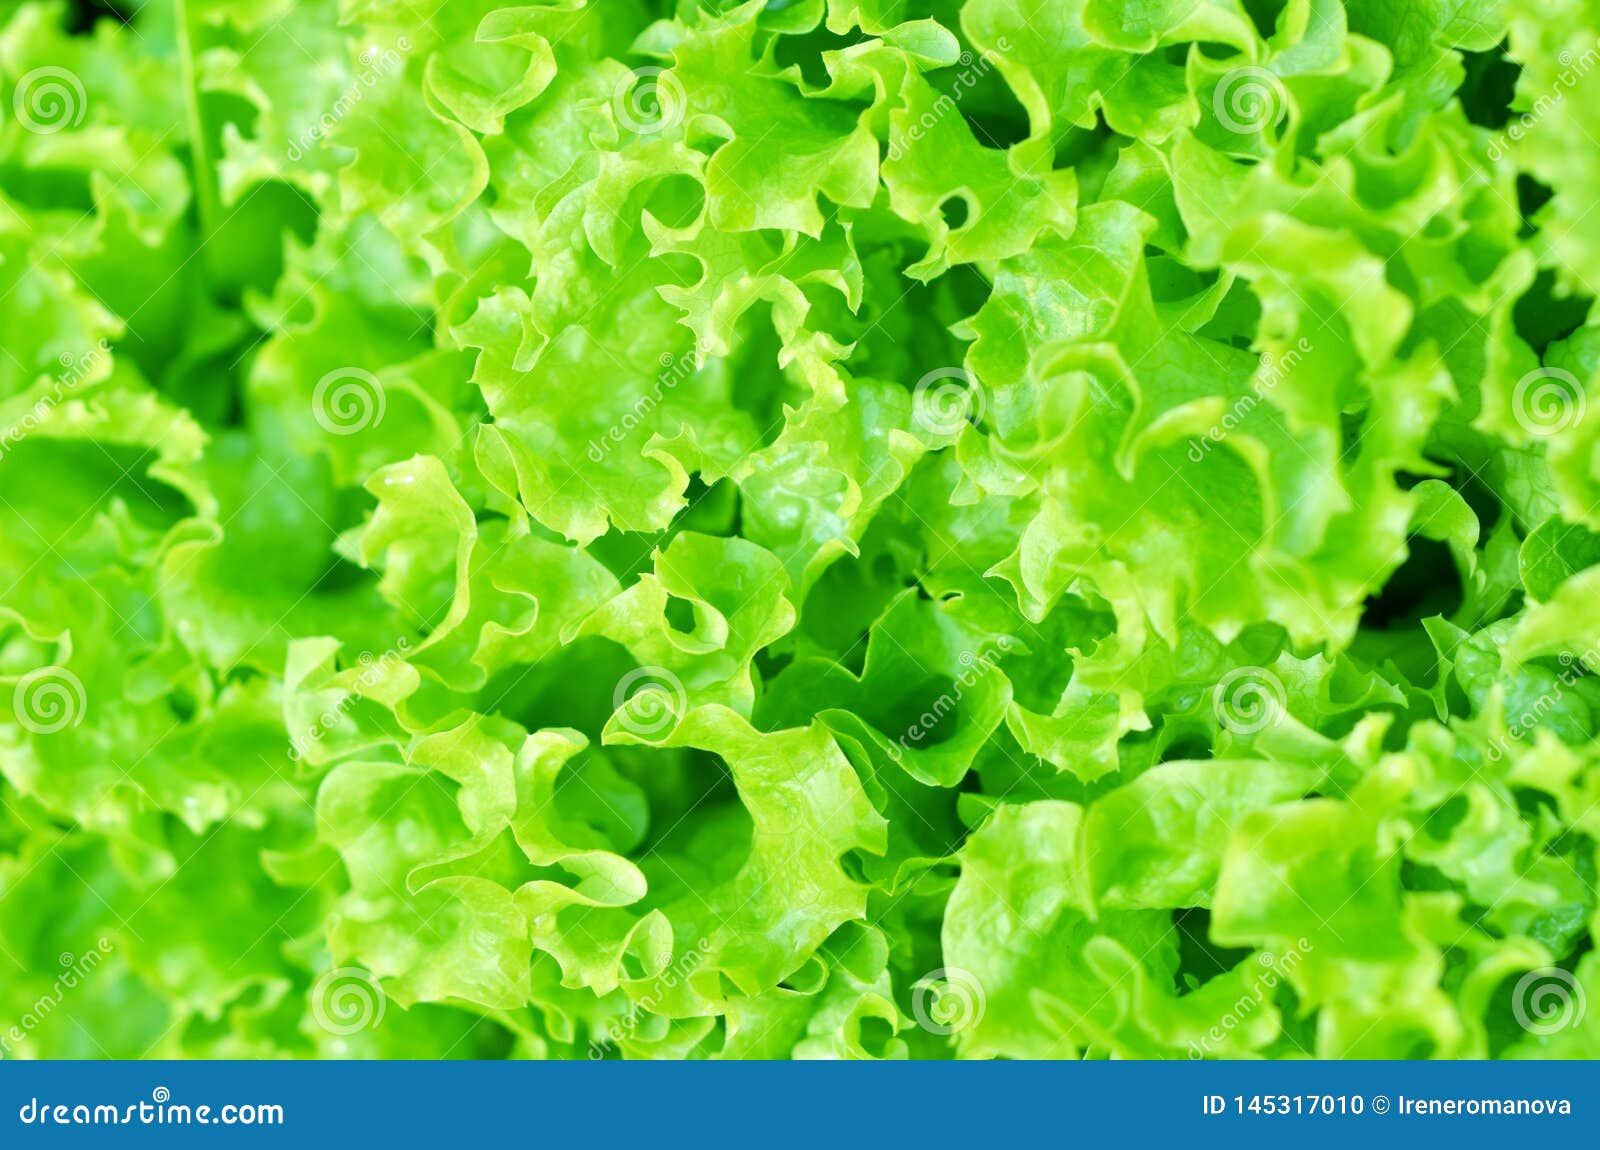 Salad Texture Green Lettuce Growing In Vegetable Garden Stock Photo Image Of Lettuce Crop 145317010